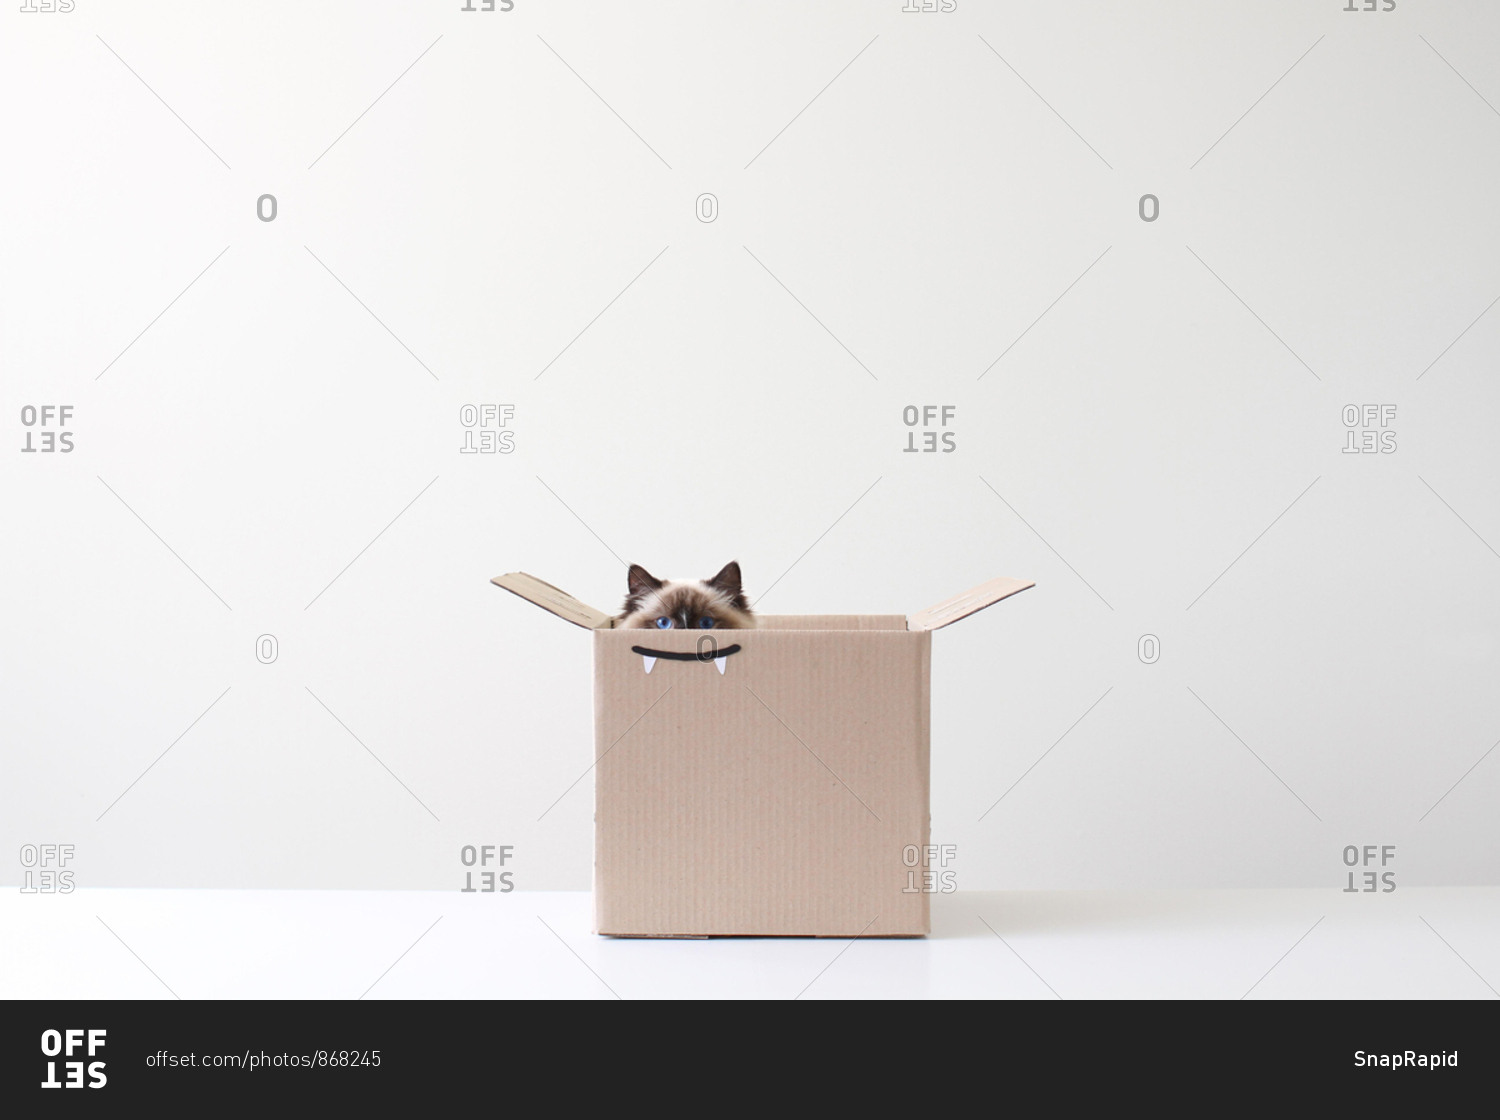 Ragdoll cat hiding in cardboard box with vampire teeth drawing